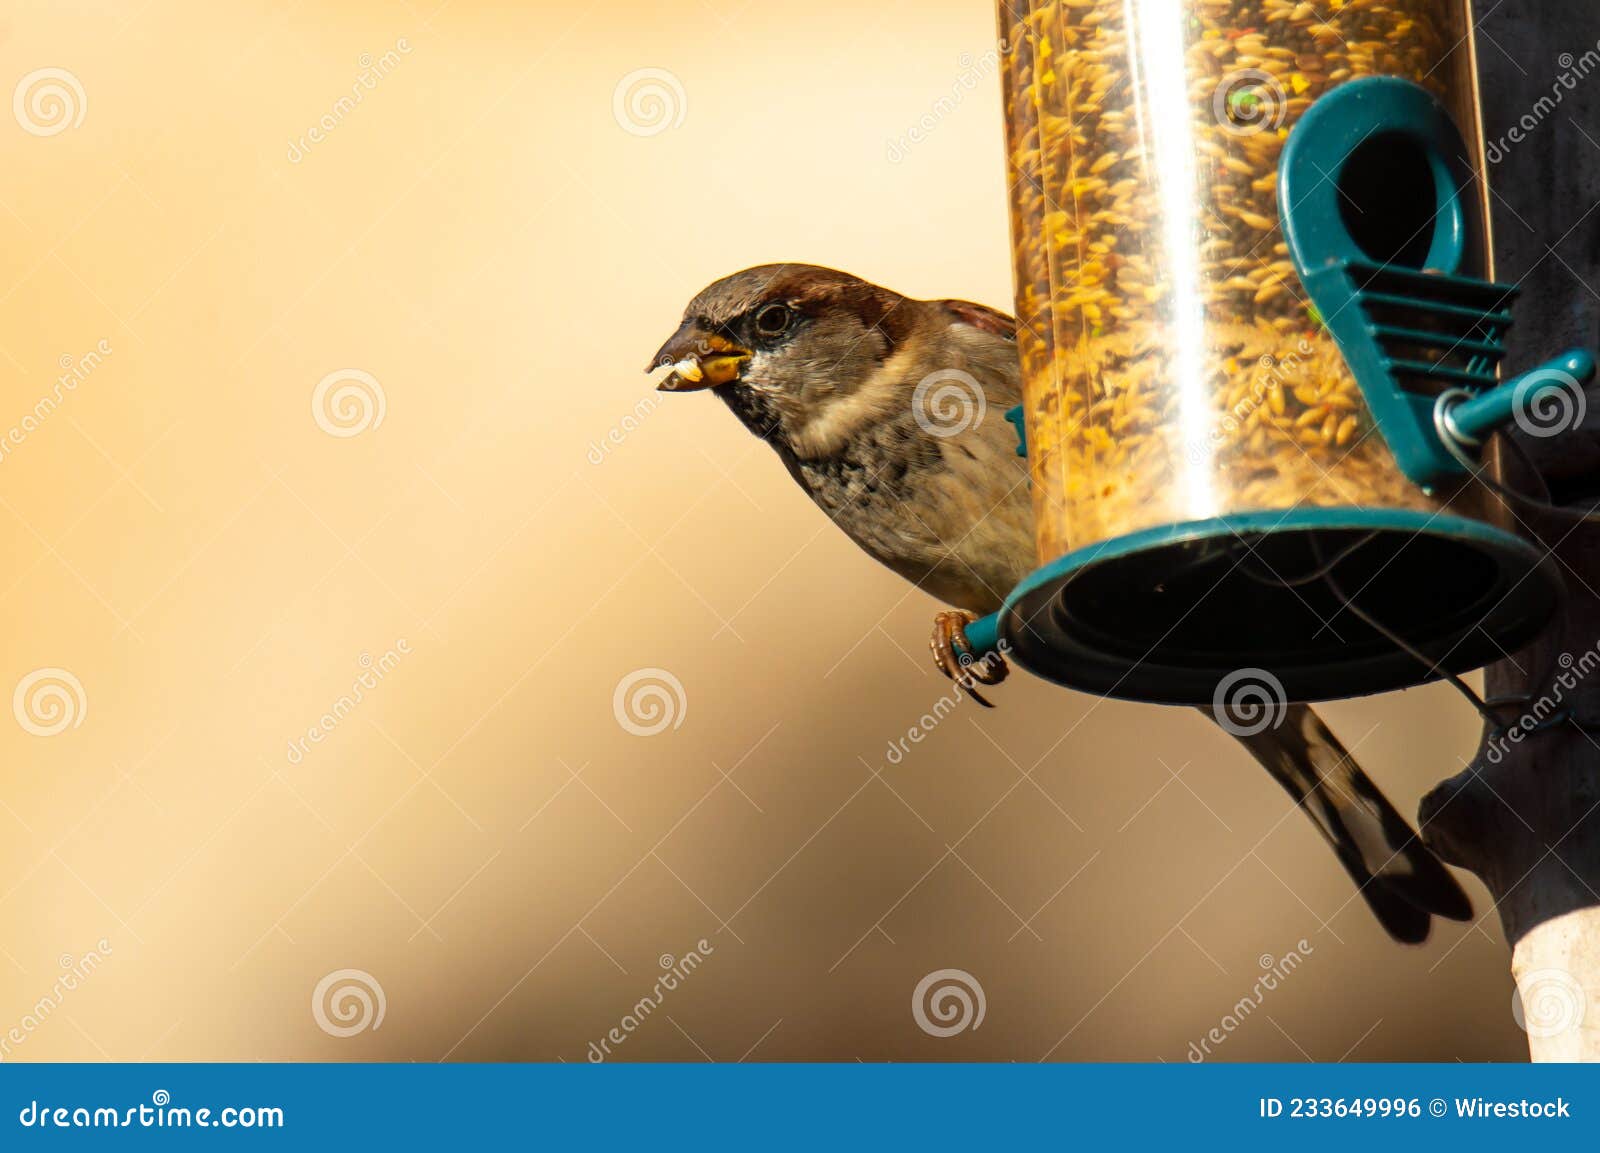 urban bird house sparrow (passer domesticus) eating in a bird feeder